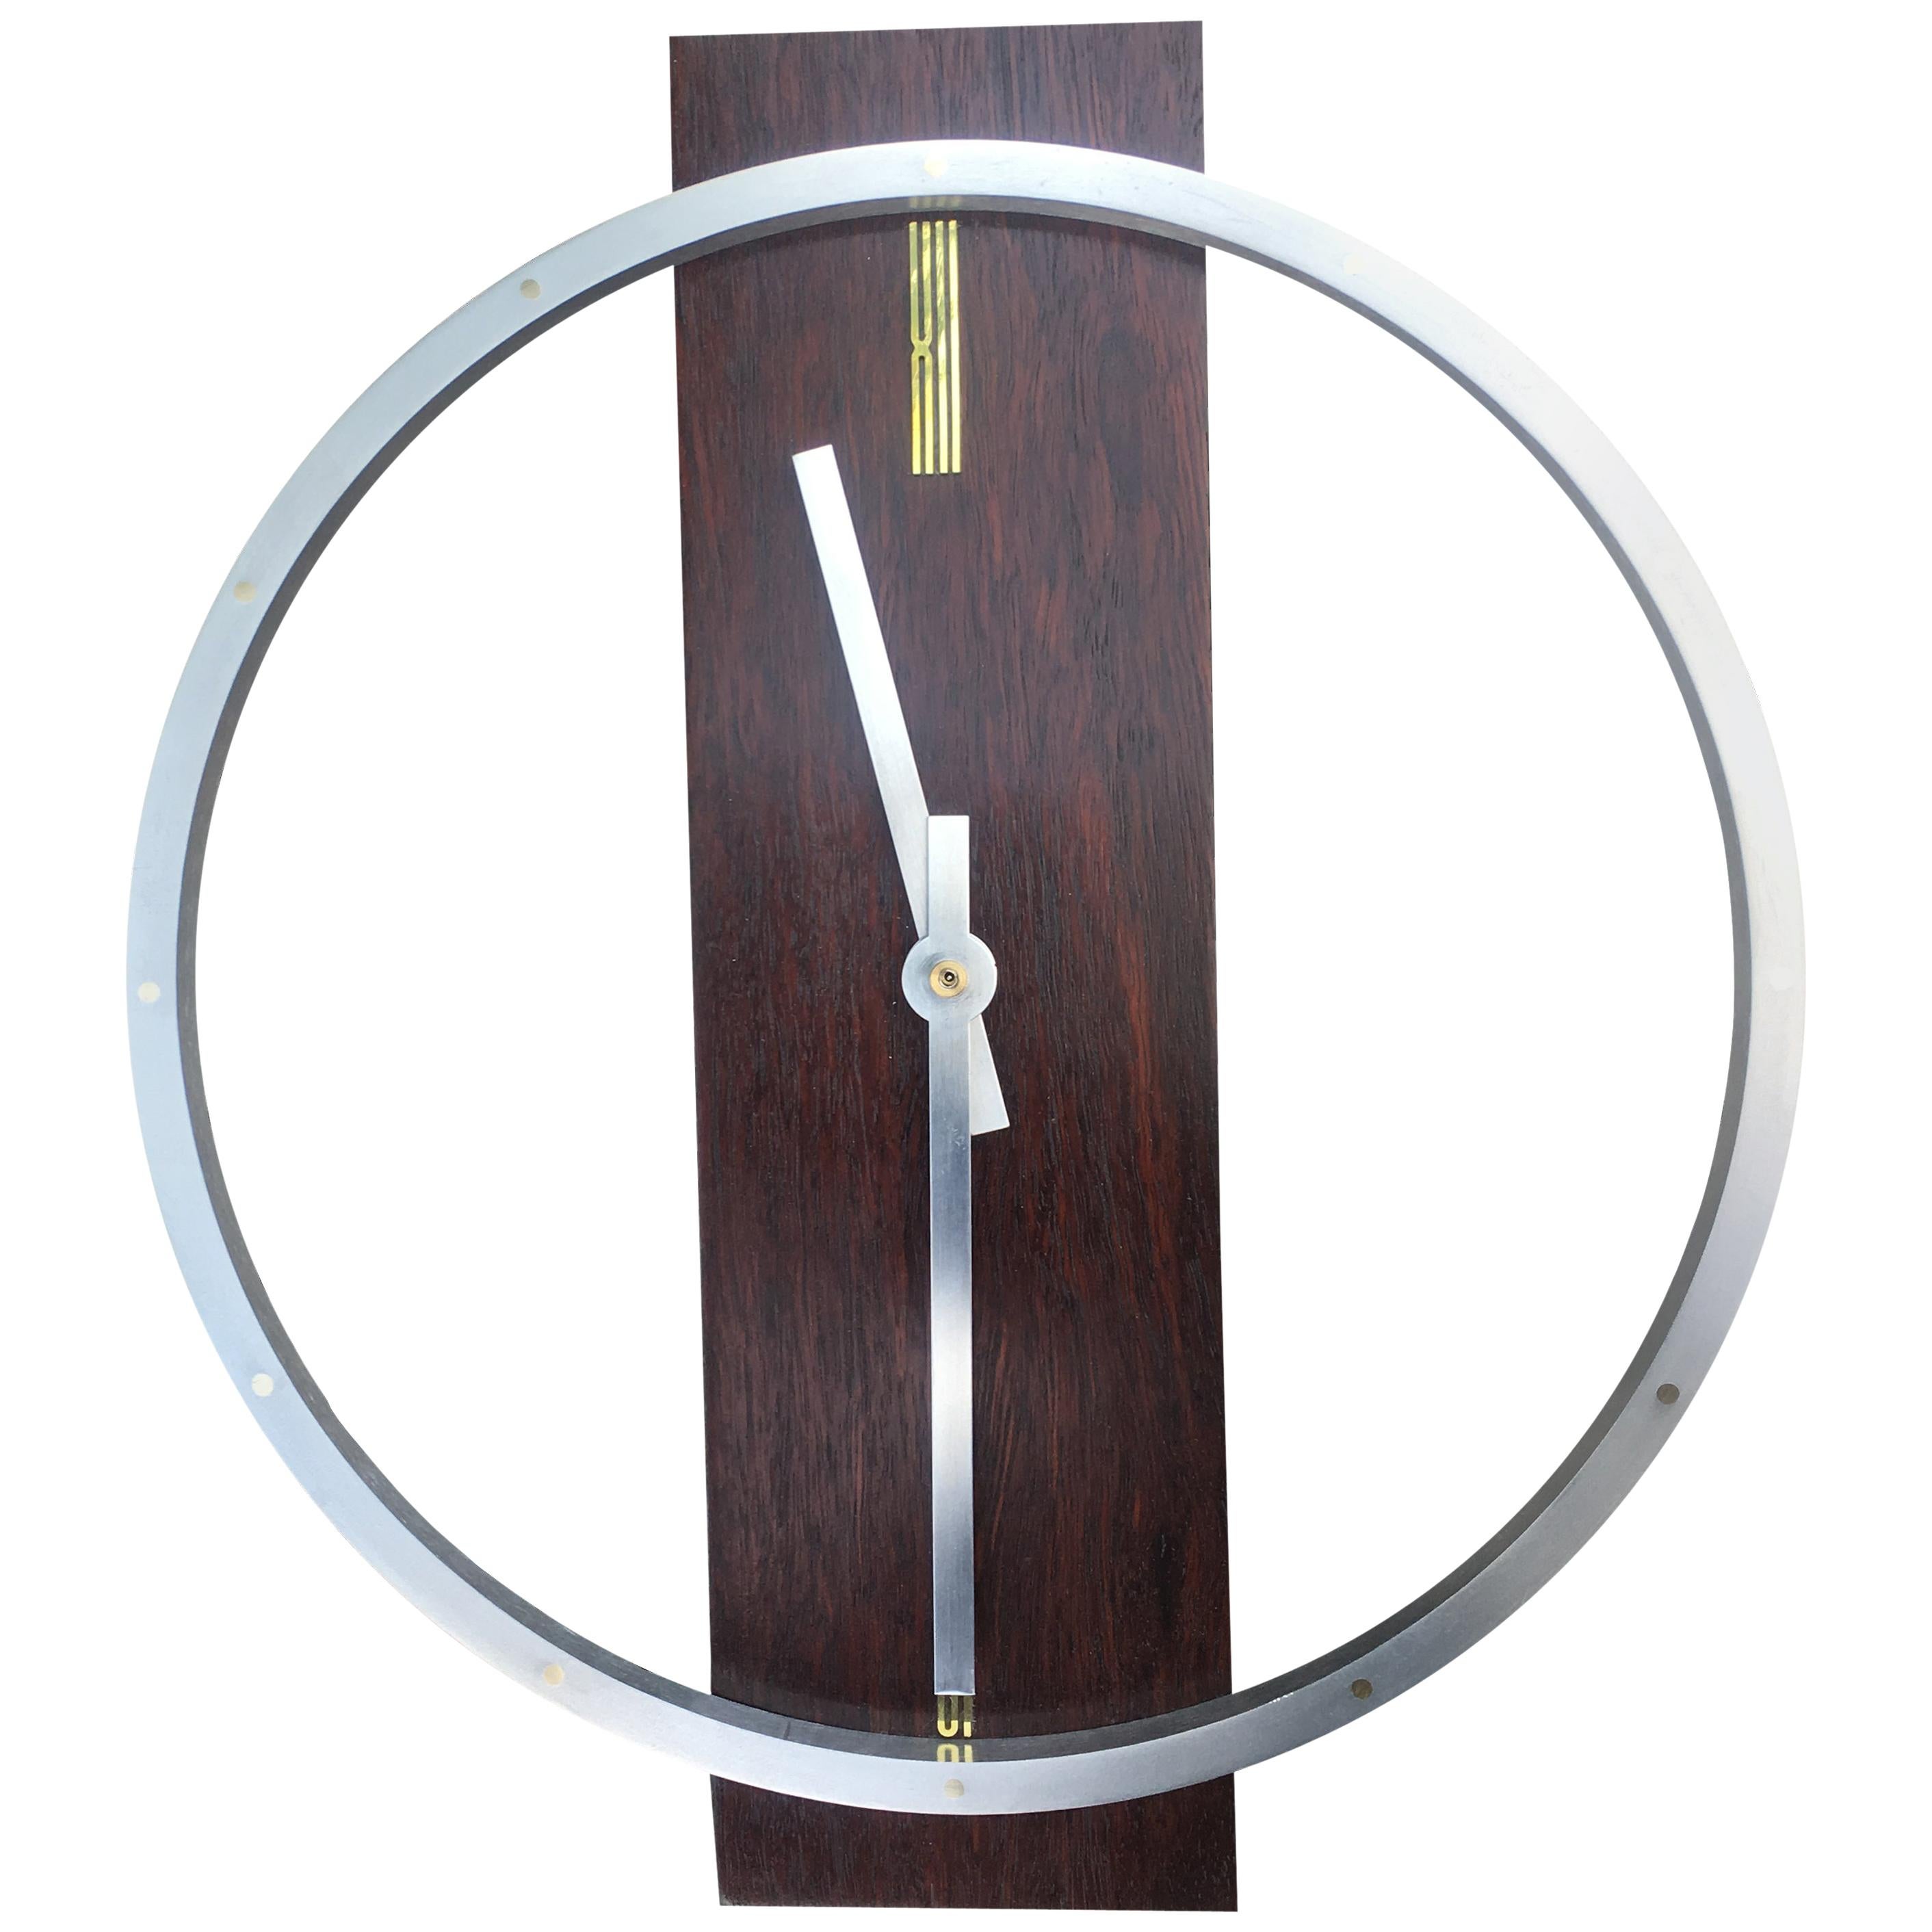 Midcentury Wall Clock in Hardwood, Aluminum and Brass